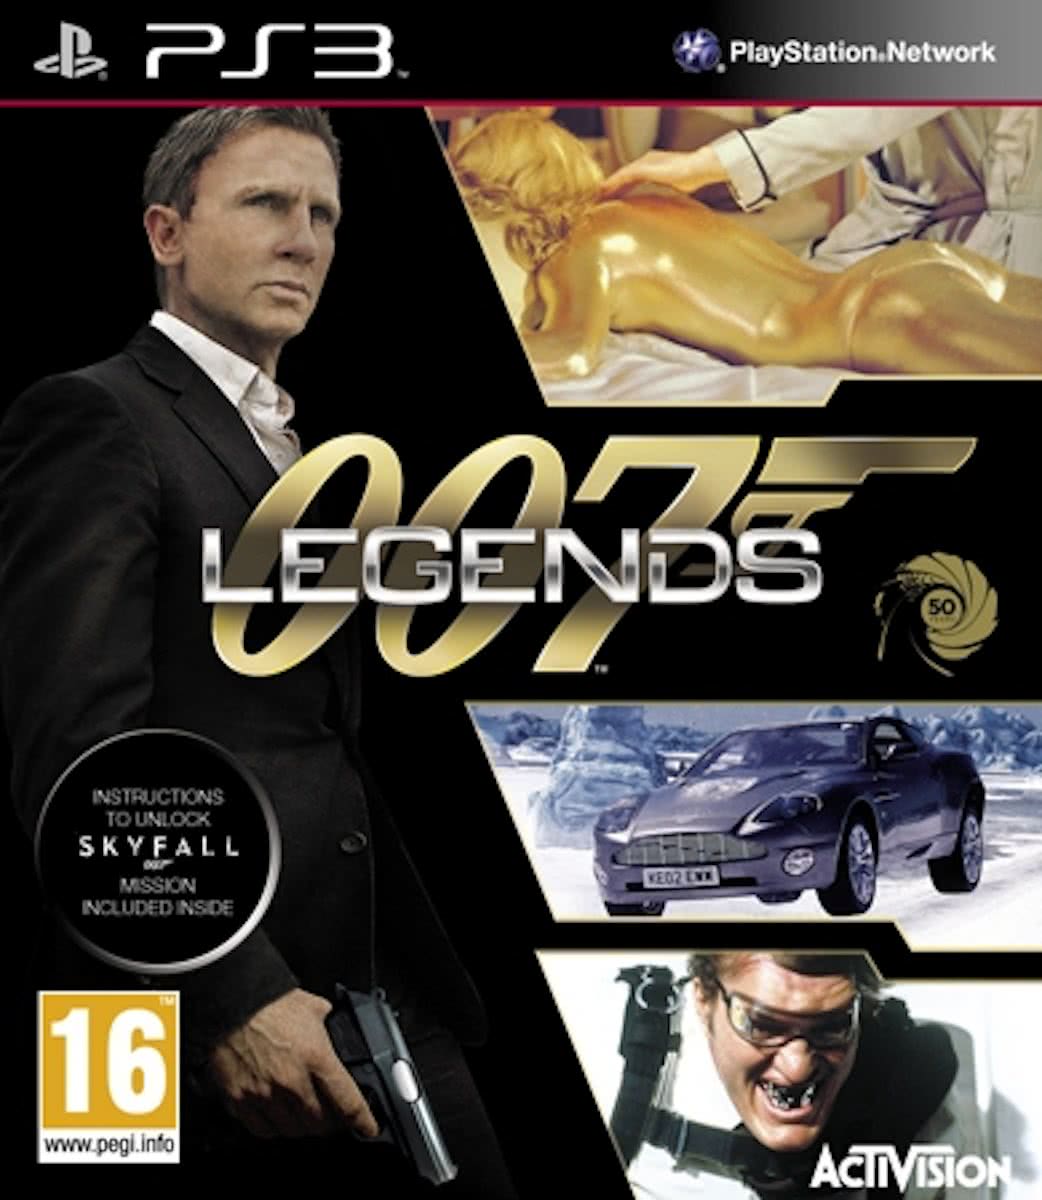 James Bond: Legends